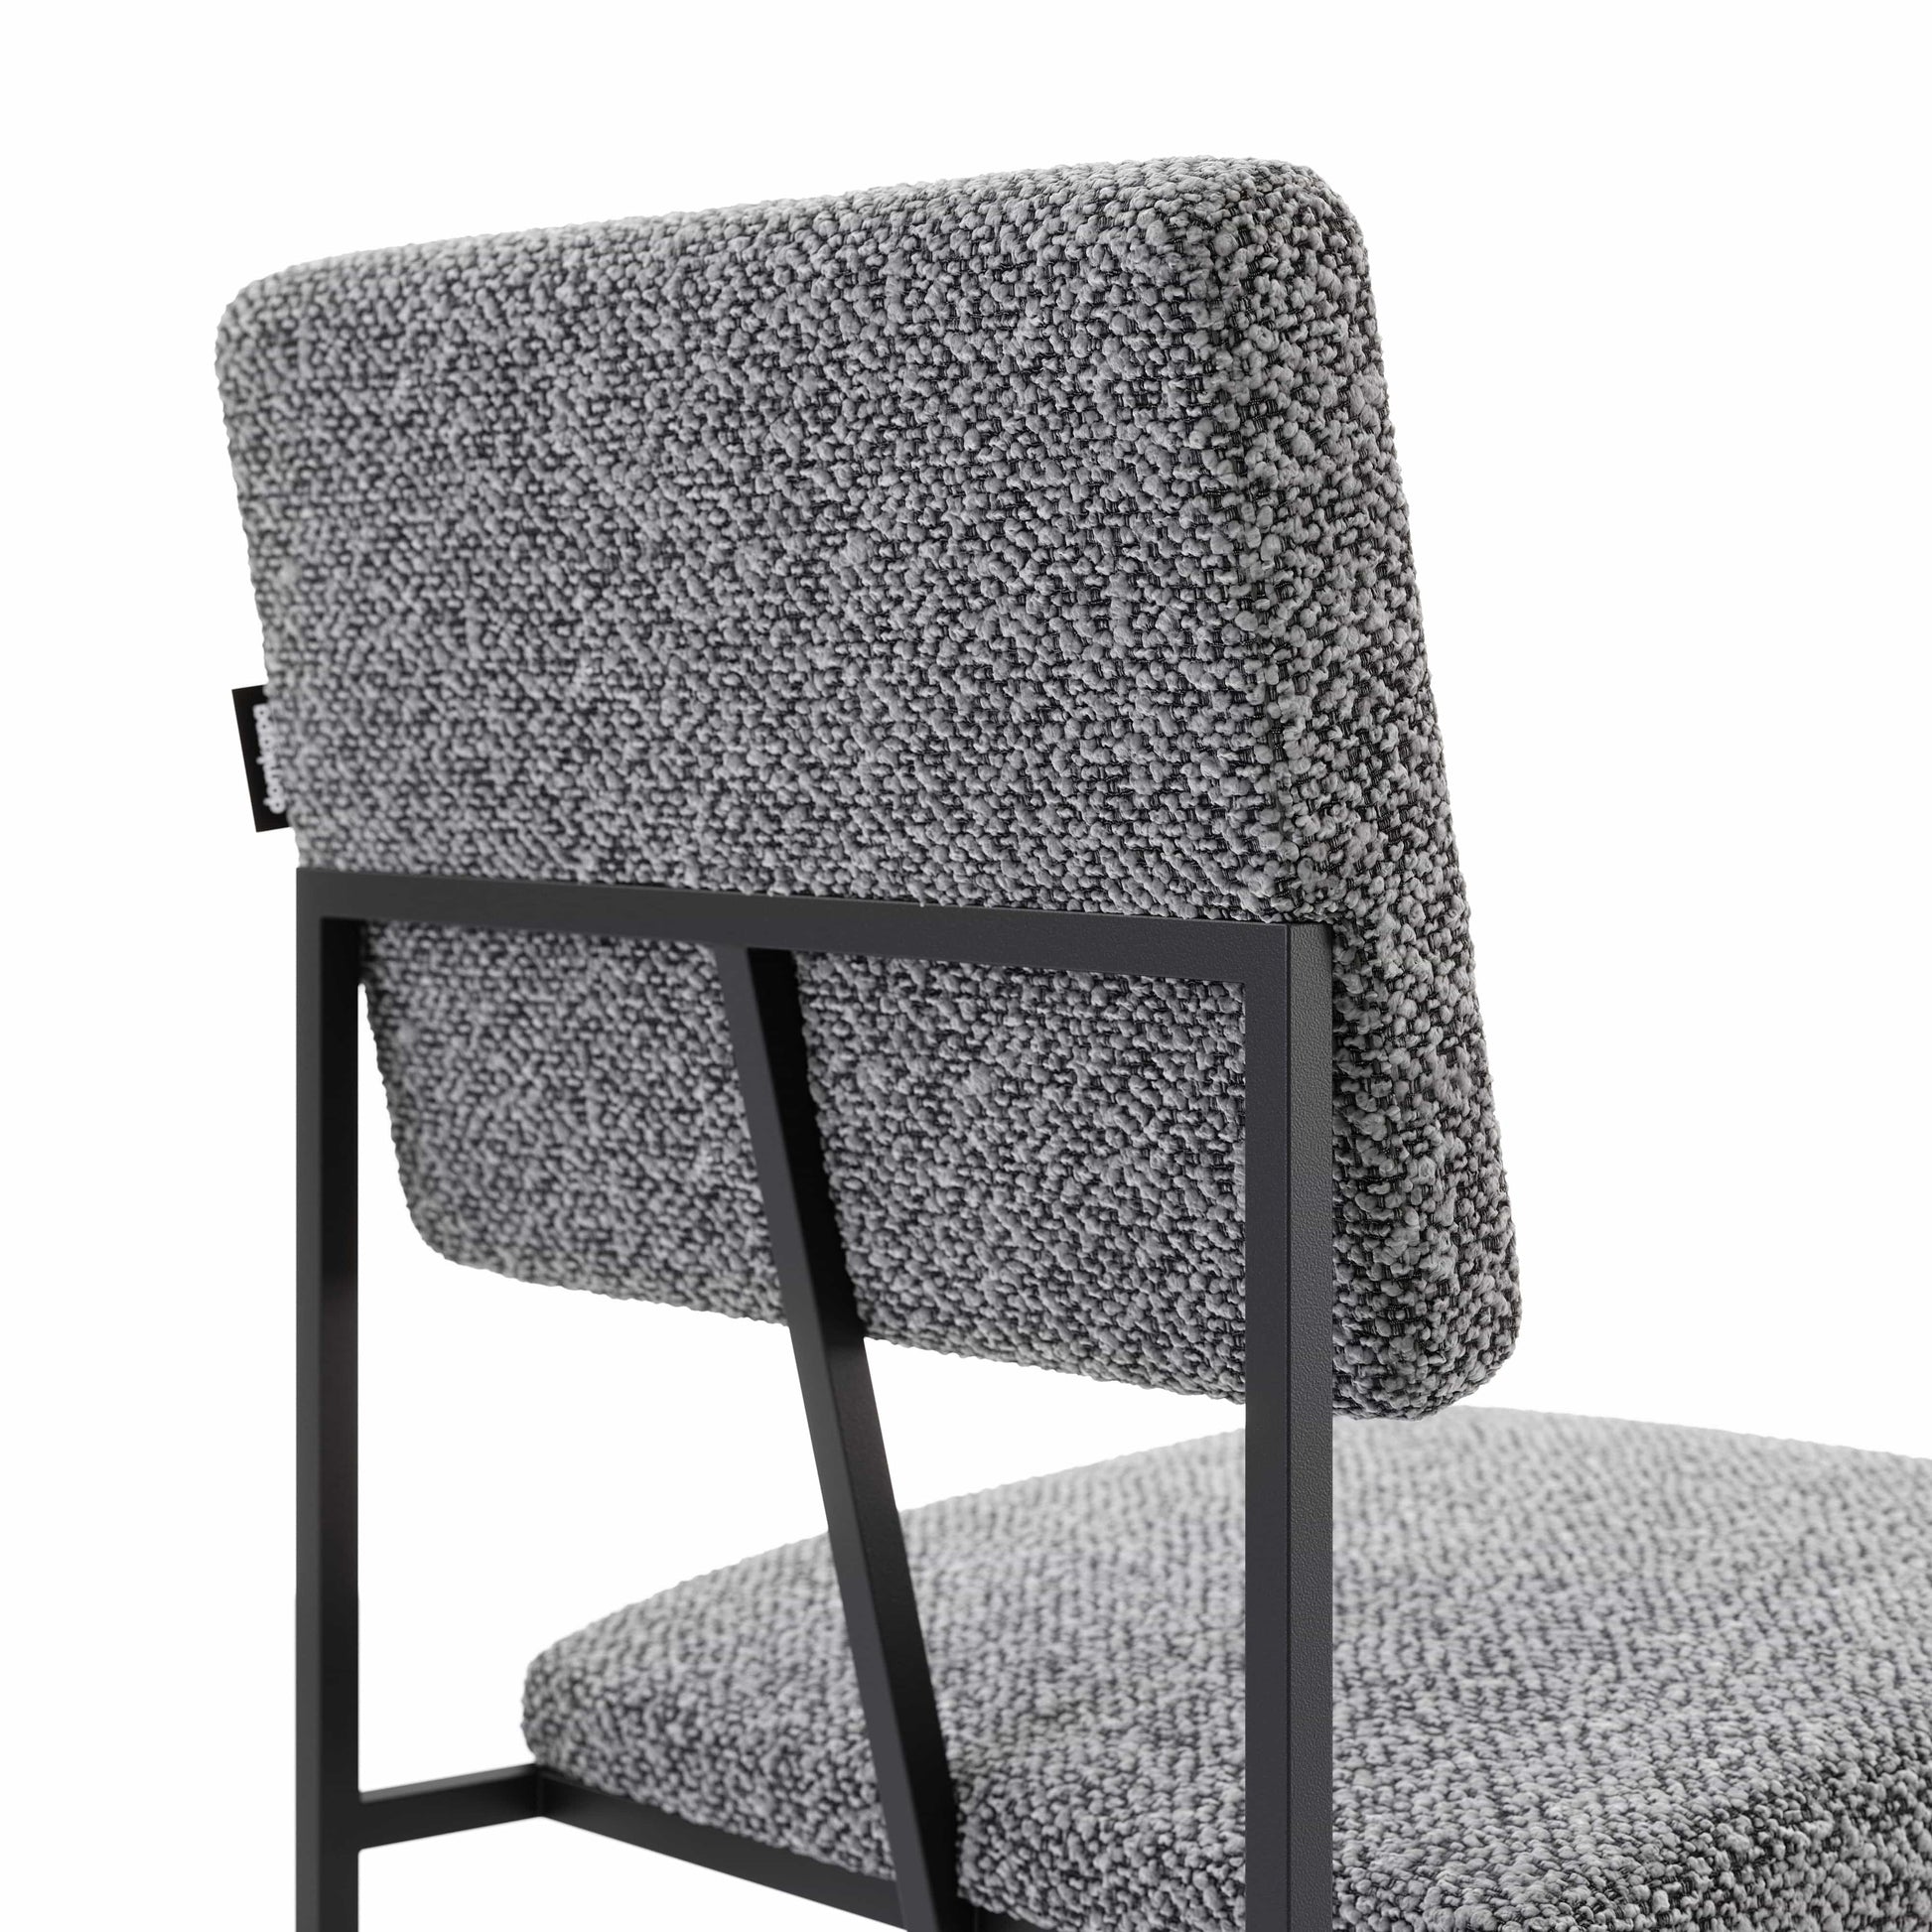 Domkapa Gram Chair by Domkapa- Weaves (Martindale: 46,000)